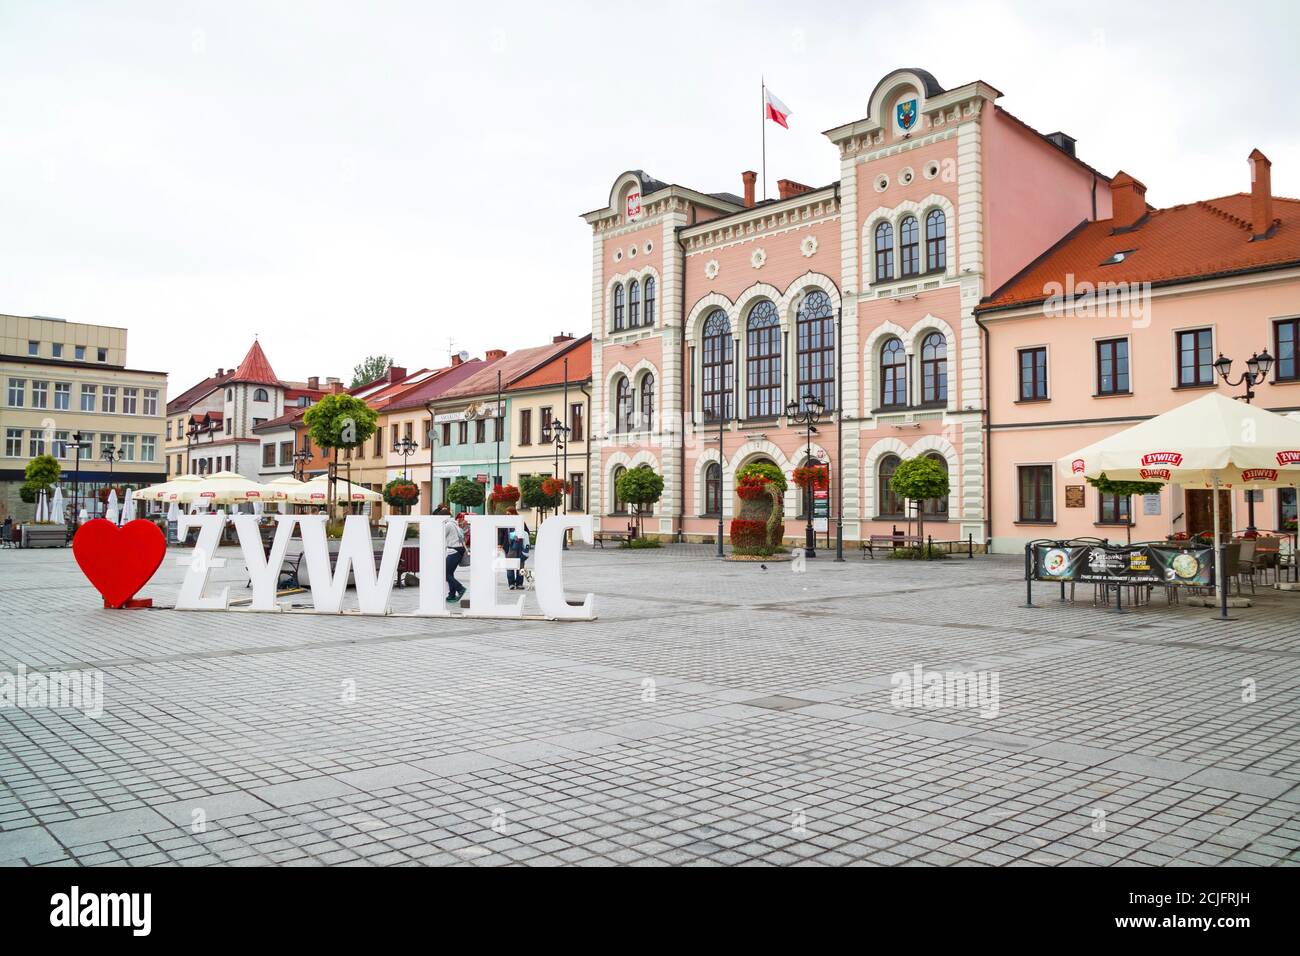 ZYWIEC, POLAND - JULY 12, 2020: Town hall by the main market square in Zywiec, Poland. Stock Photo